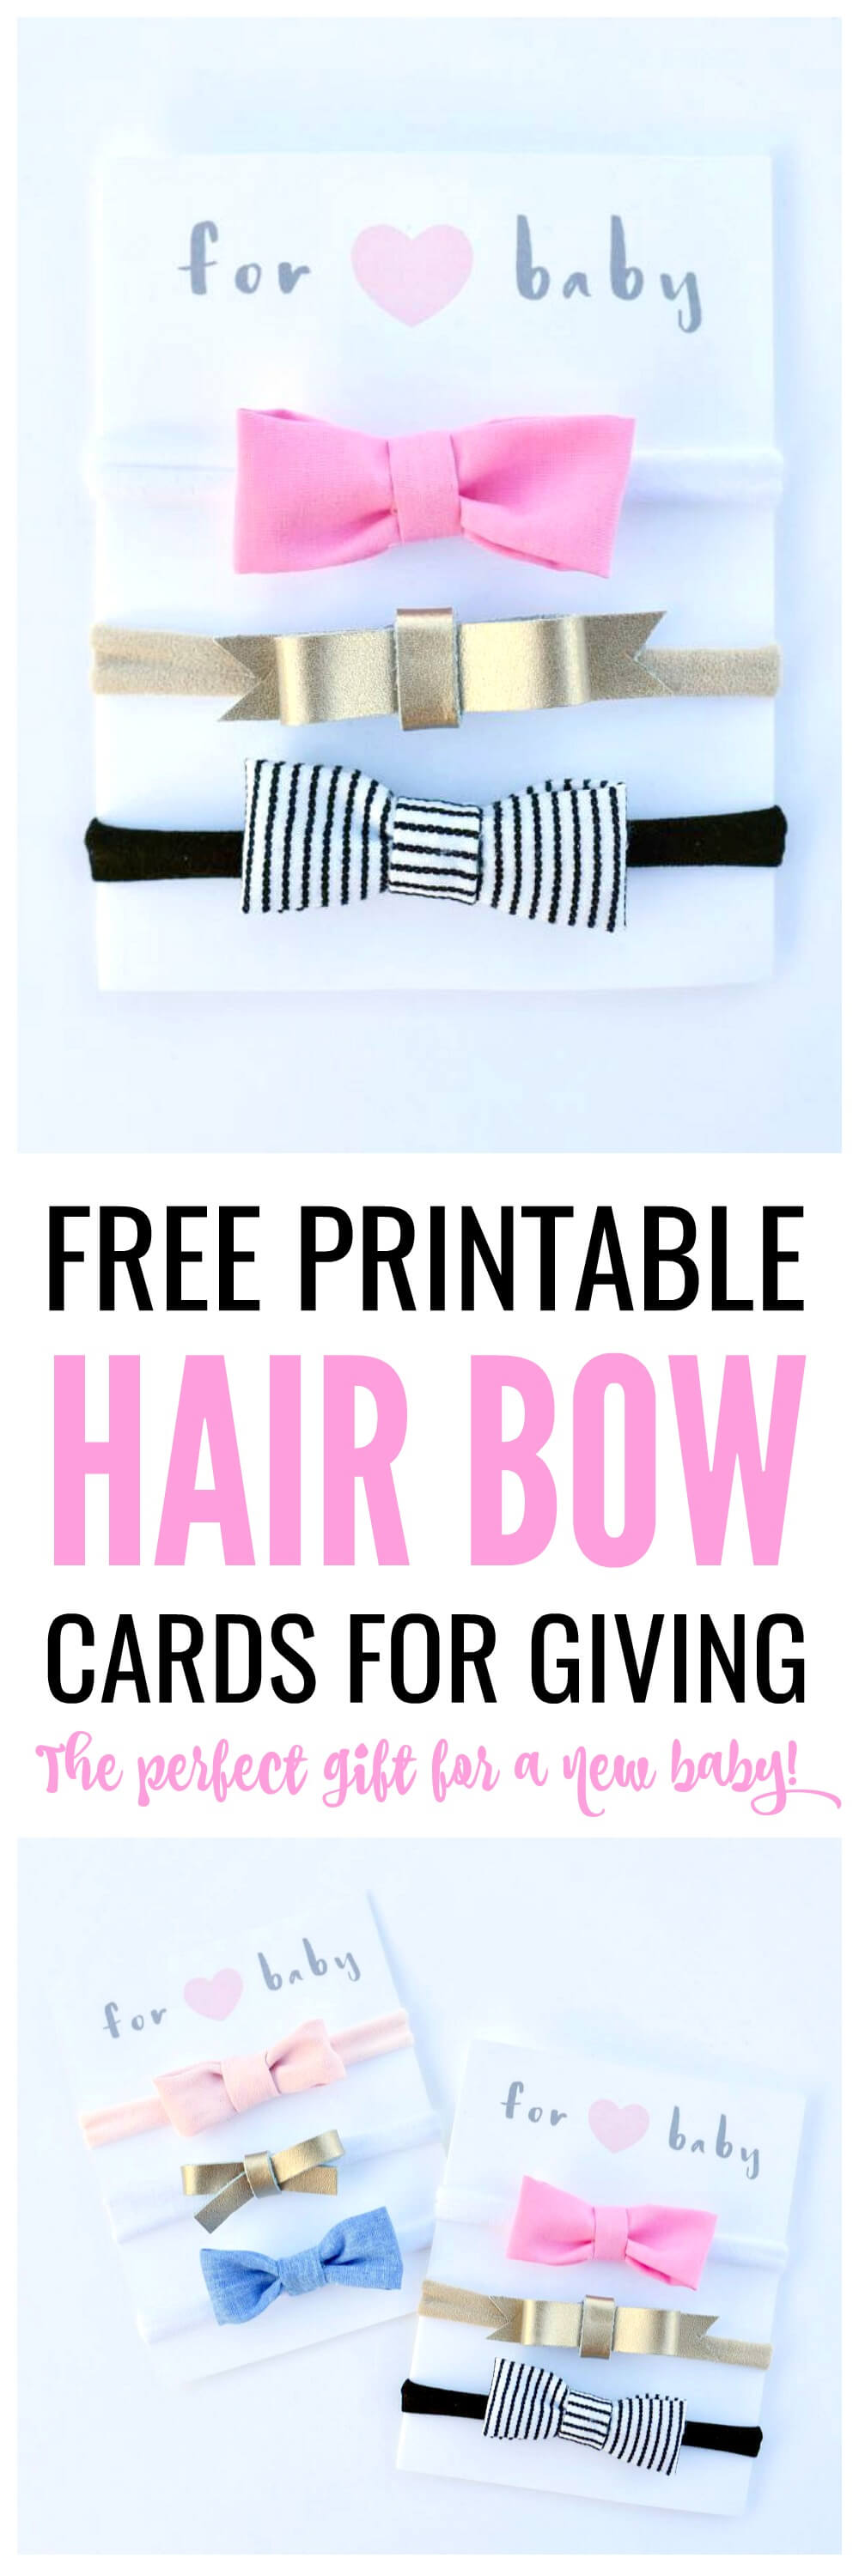 Free Printable Hair Bow Cards For Diy Hair Bows And Inside Headband Card Template